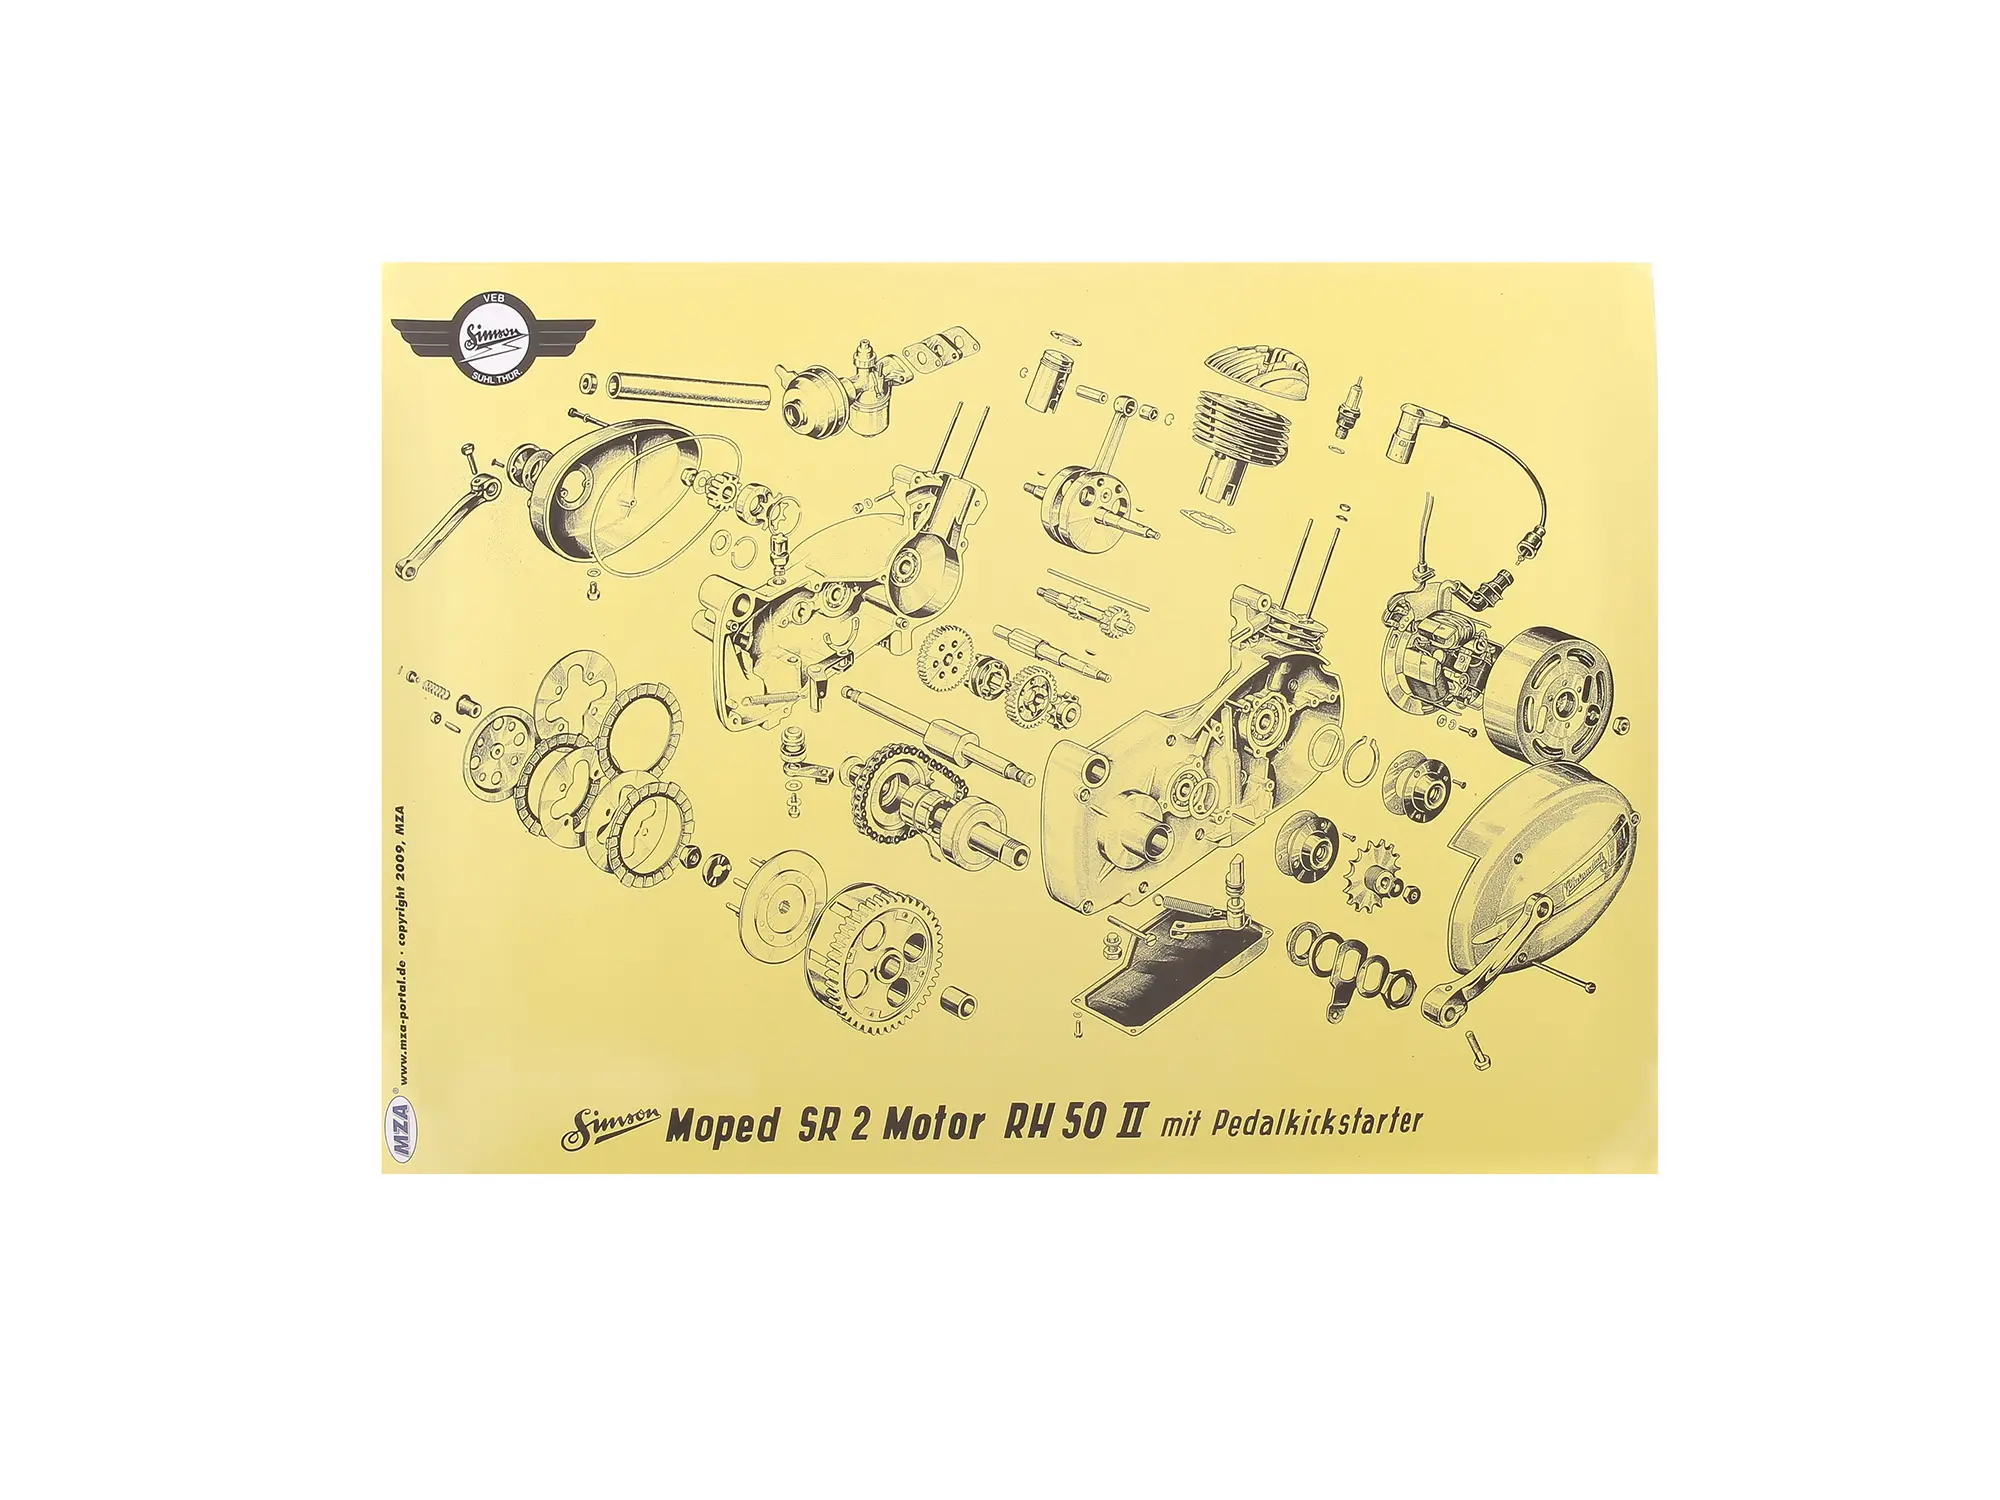 Explosionsdarstellung Farbposter (72x50cm) Simson SR2 Motor RH50II SR2 mit Pedalkickstarter, Art.-Nr.: 10016458 - Bild 1